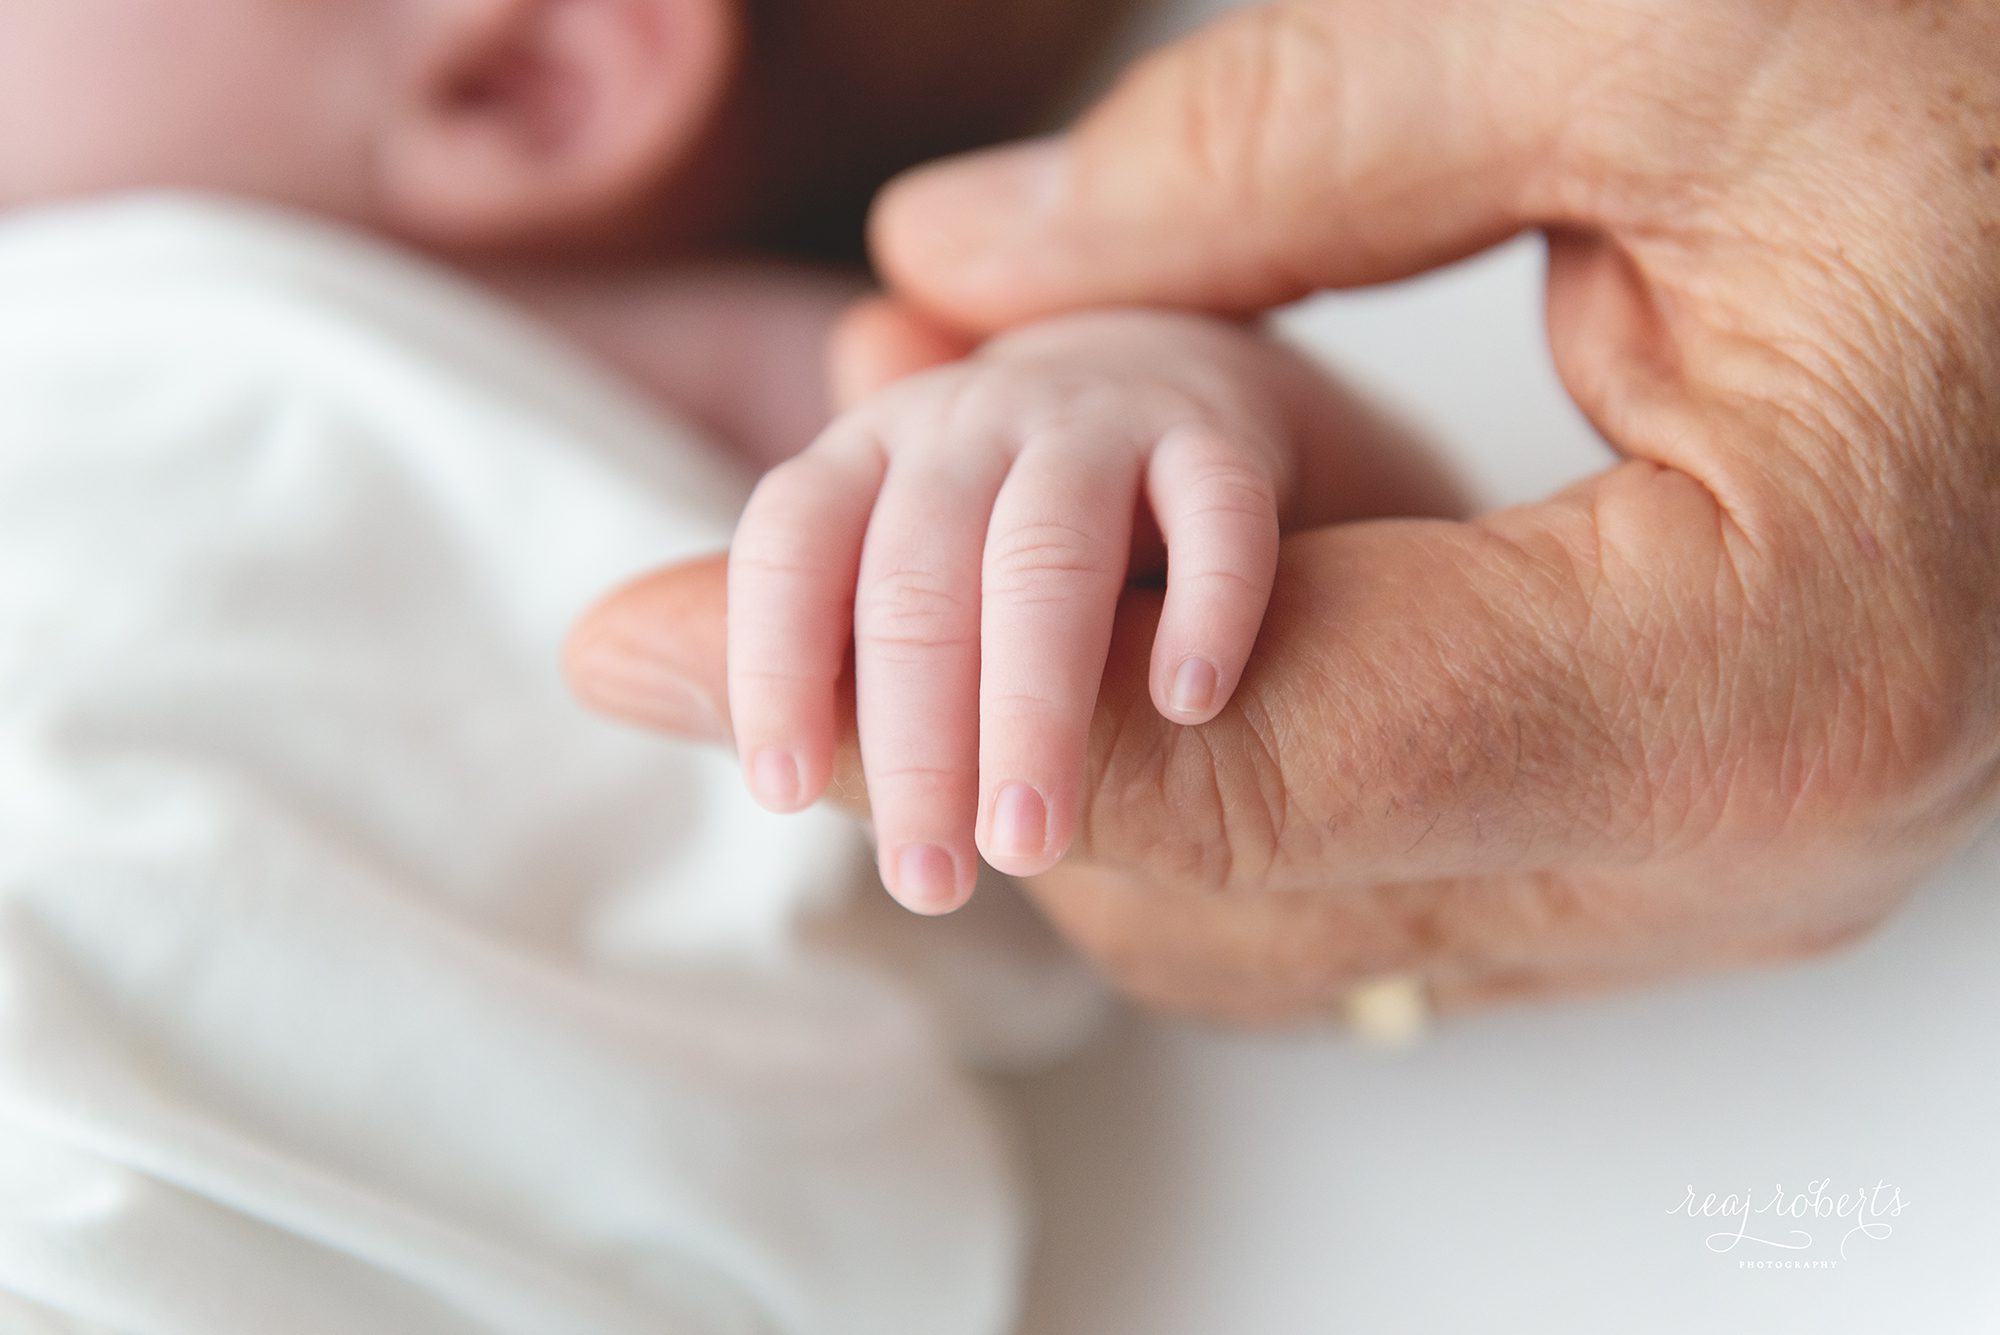 Simple, natural, newborn photos, baby hands and fingers, details | Phoenix Newborn Photographer | Reaj Roberts Photography